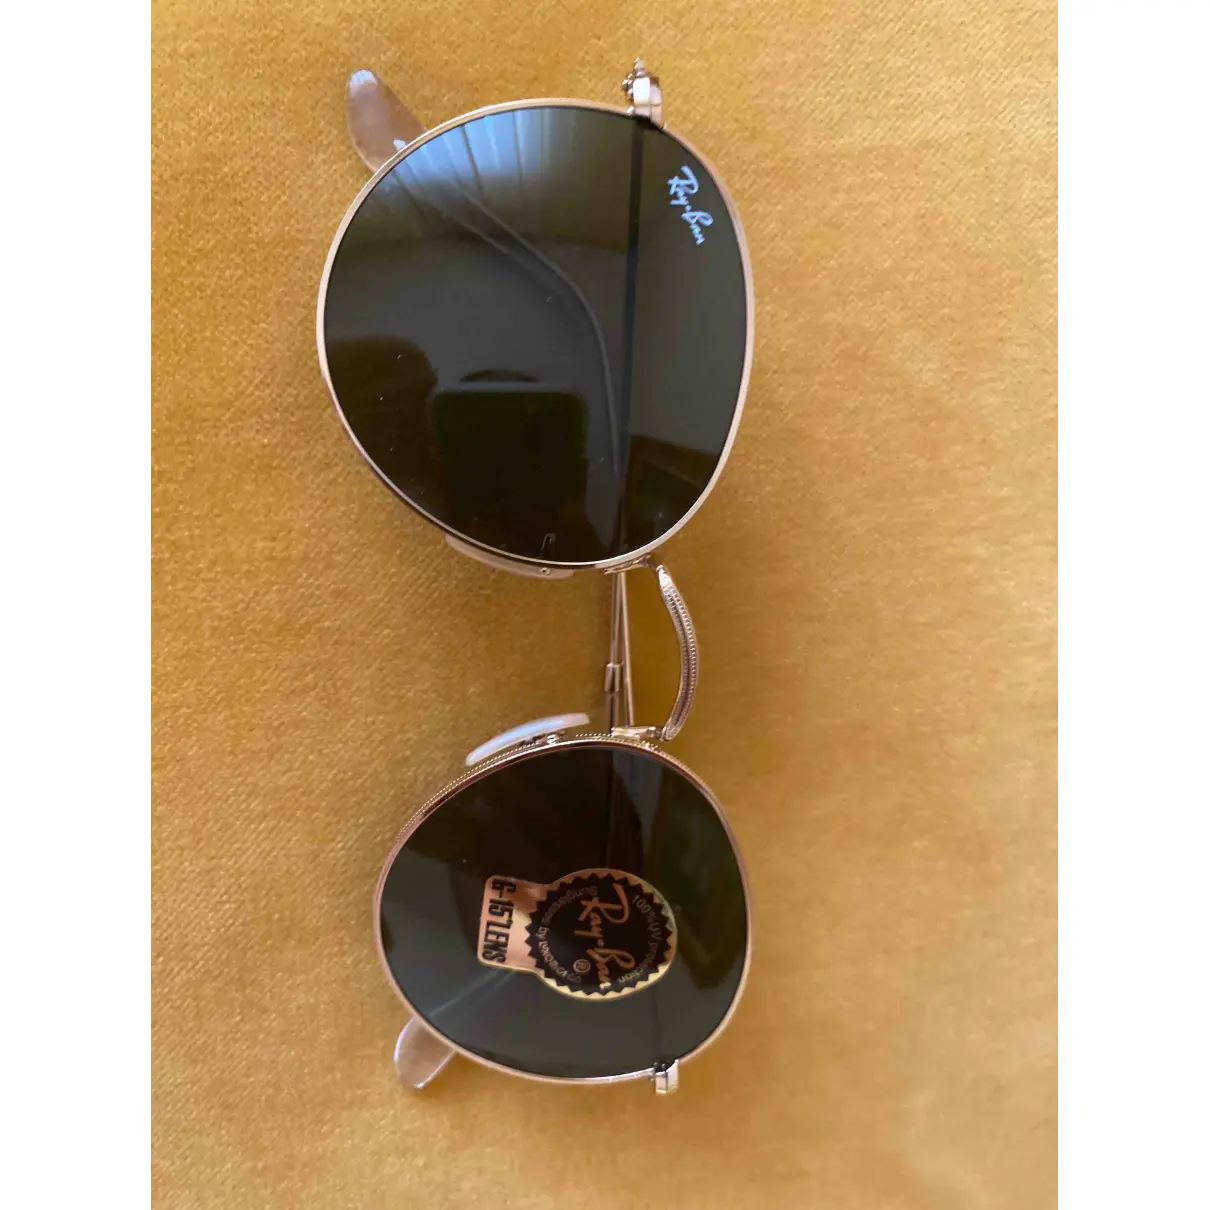 Buy Ray-Ban Round sunglasses online